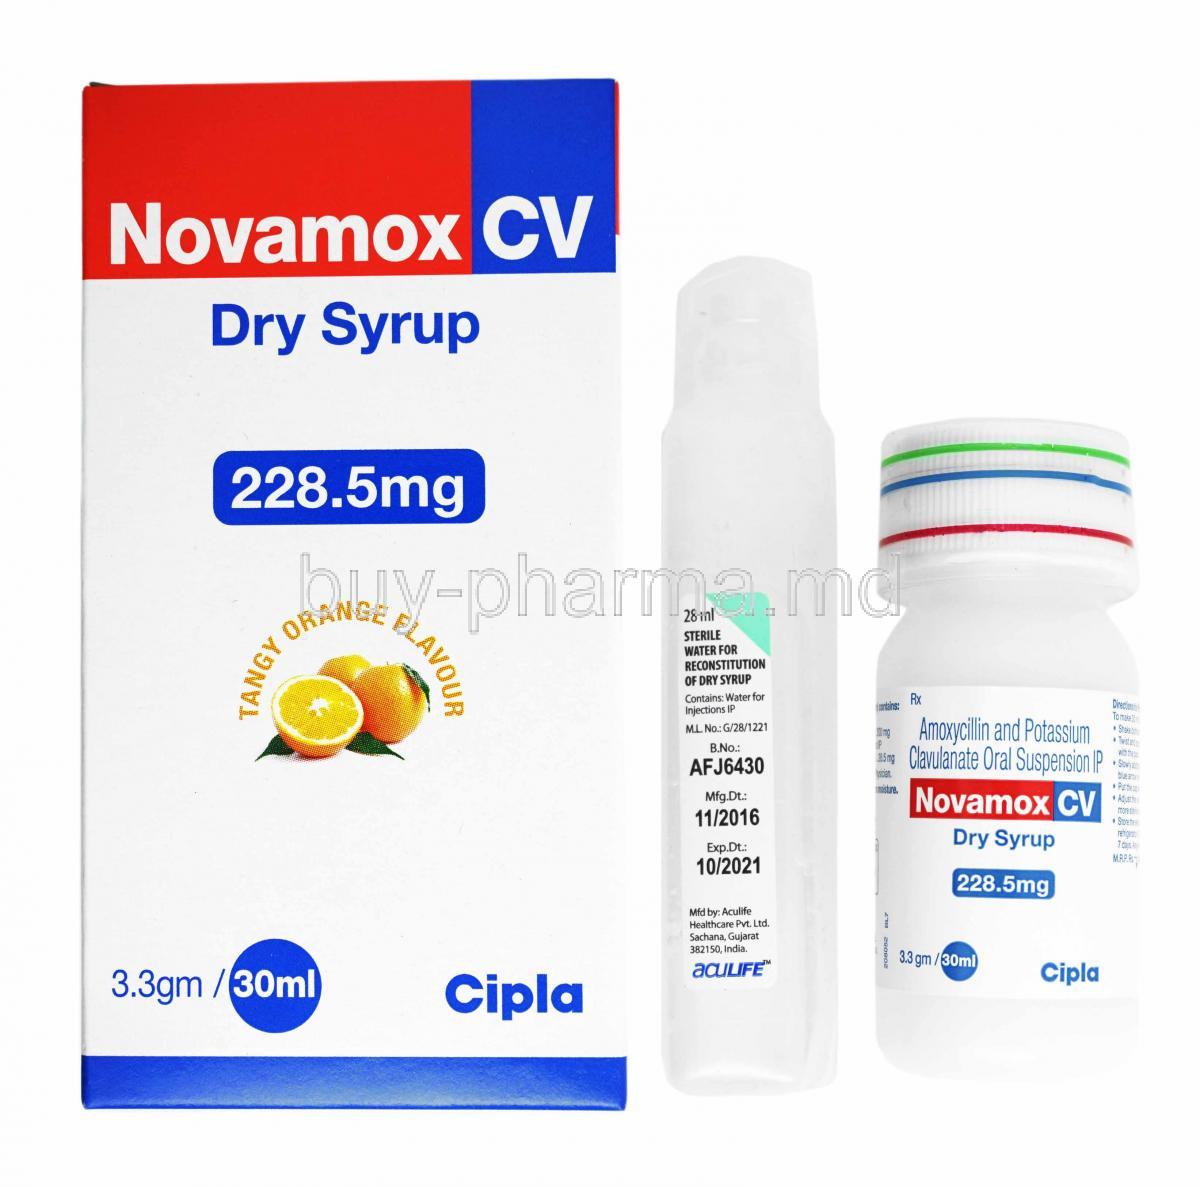 Paxlovid prescription by pharmacist